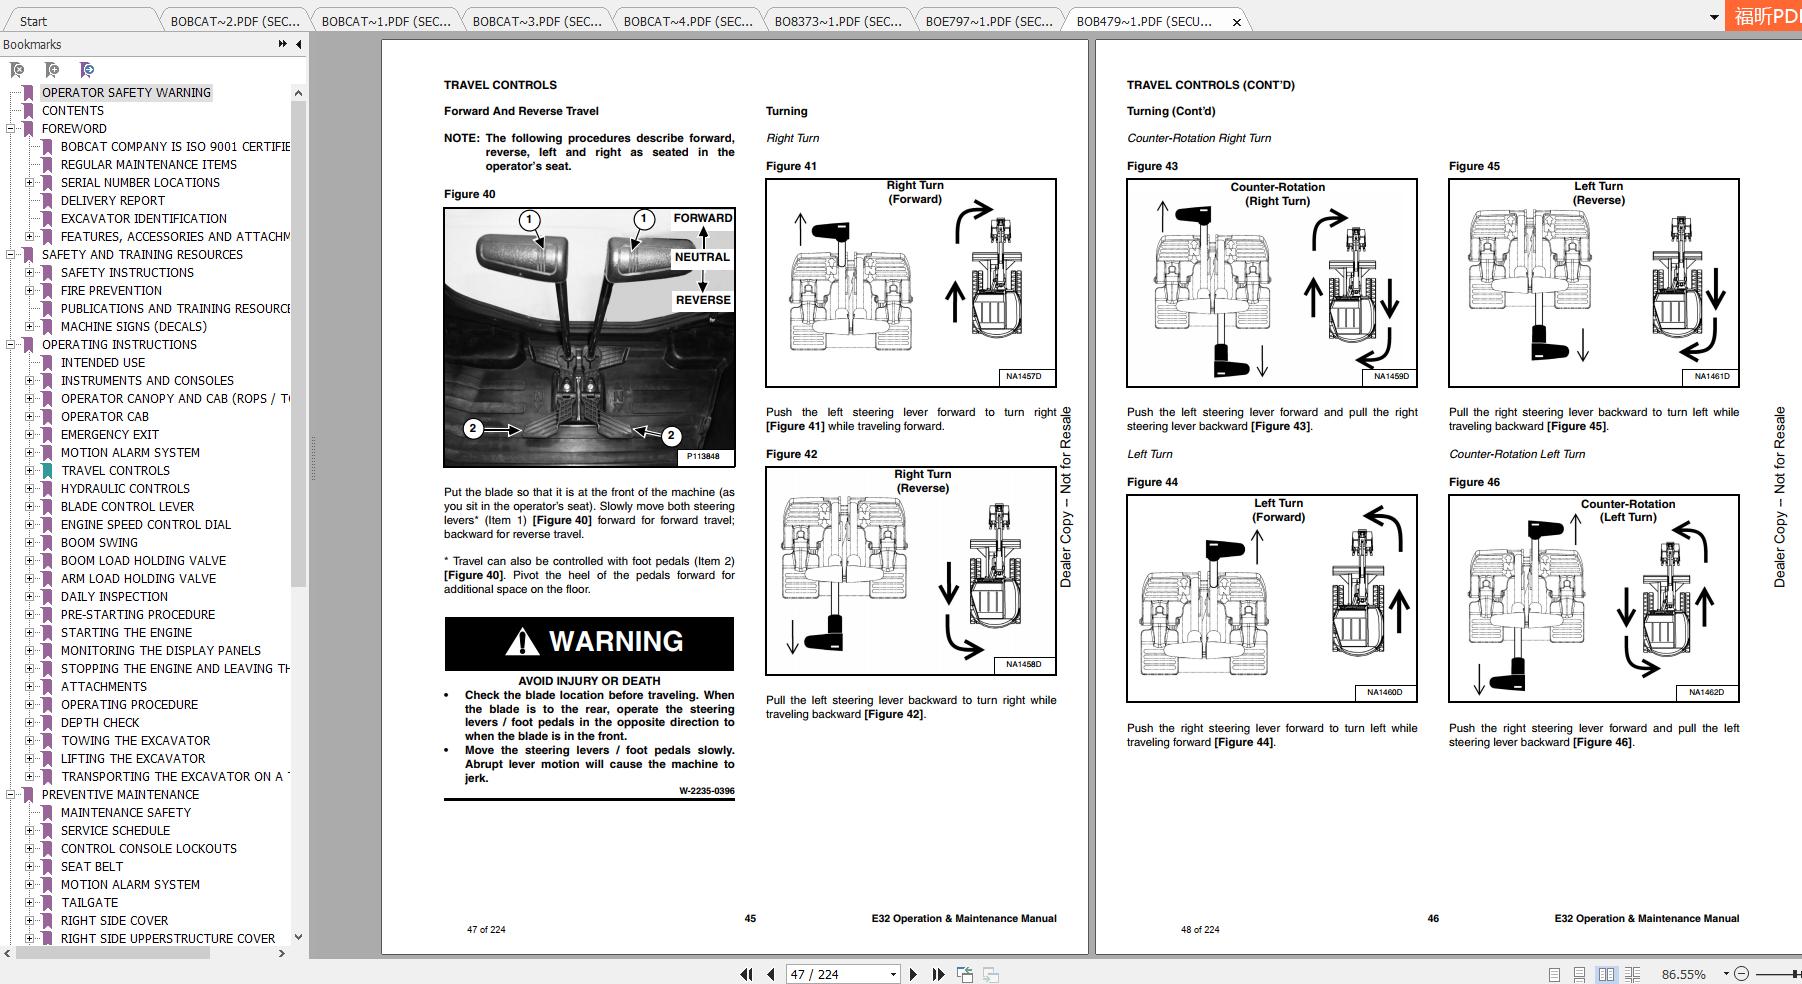 Bobcat Compact Excavator E32 Operation & Maintenance Manuals | Auto ...